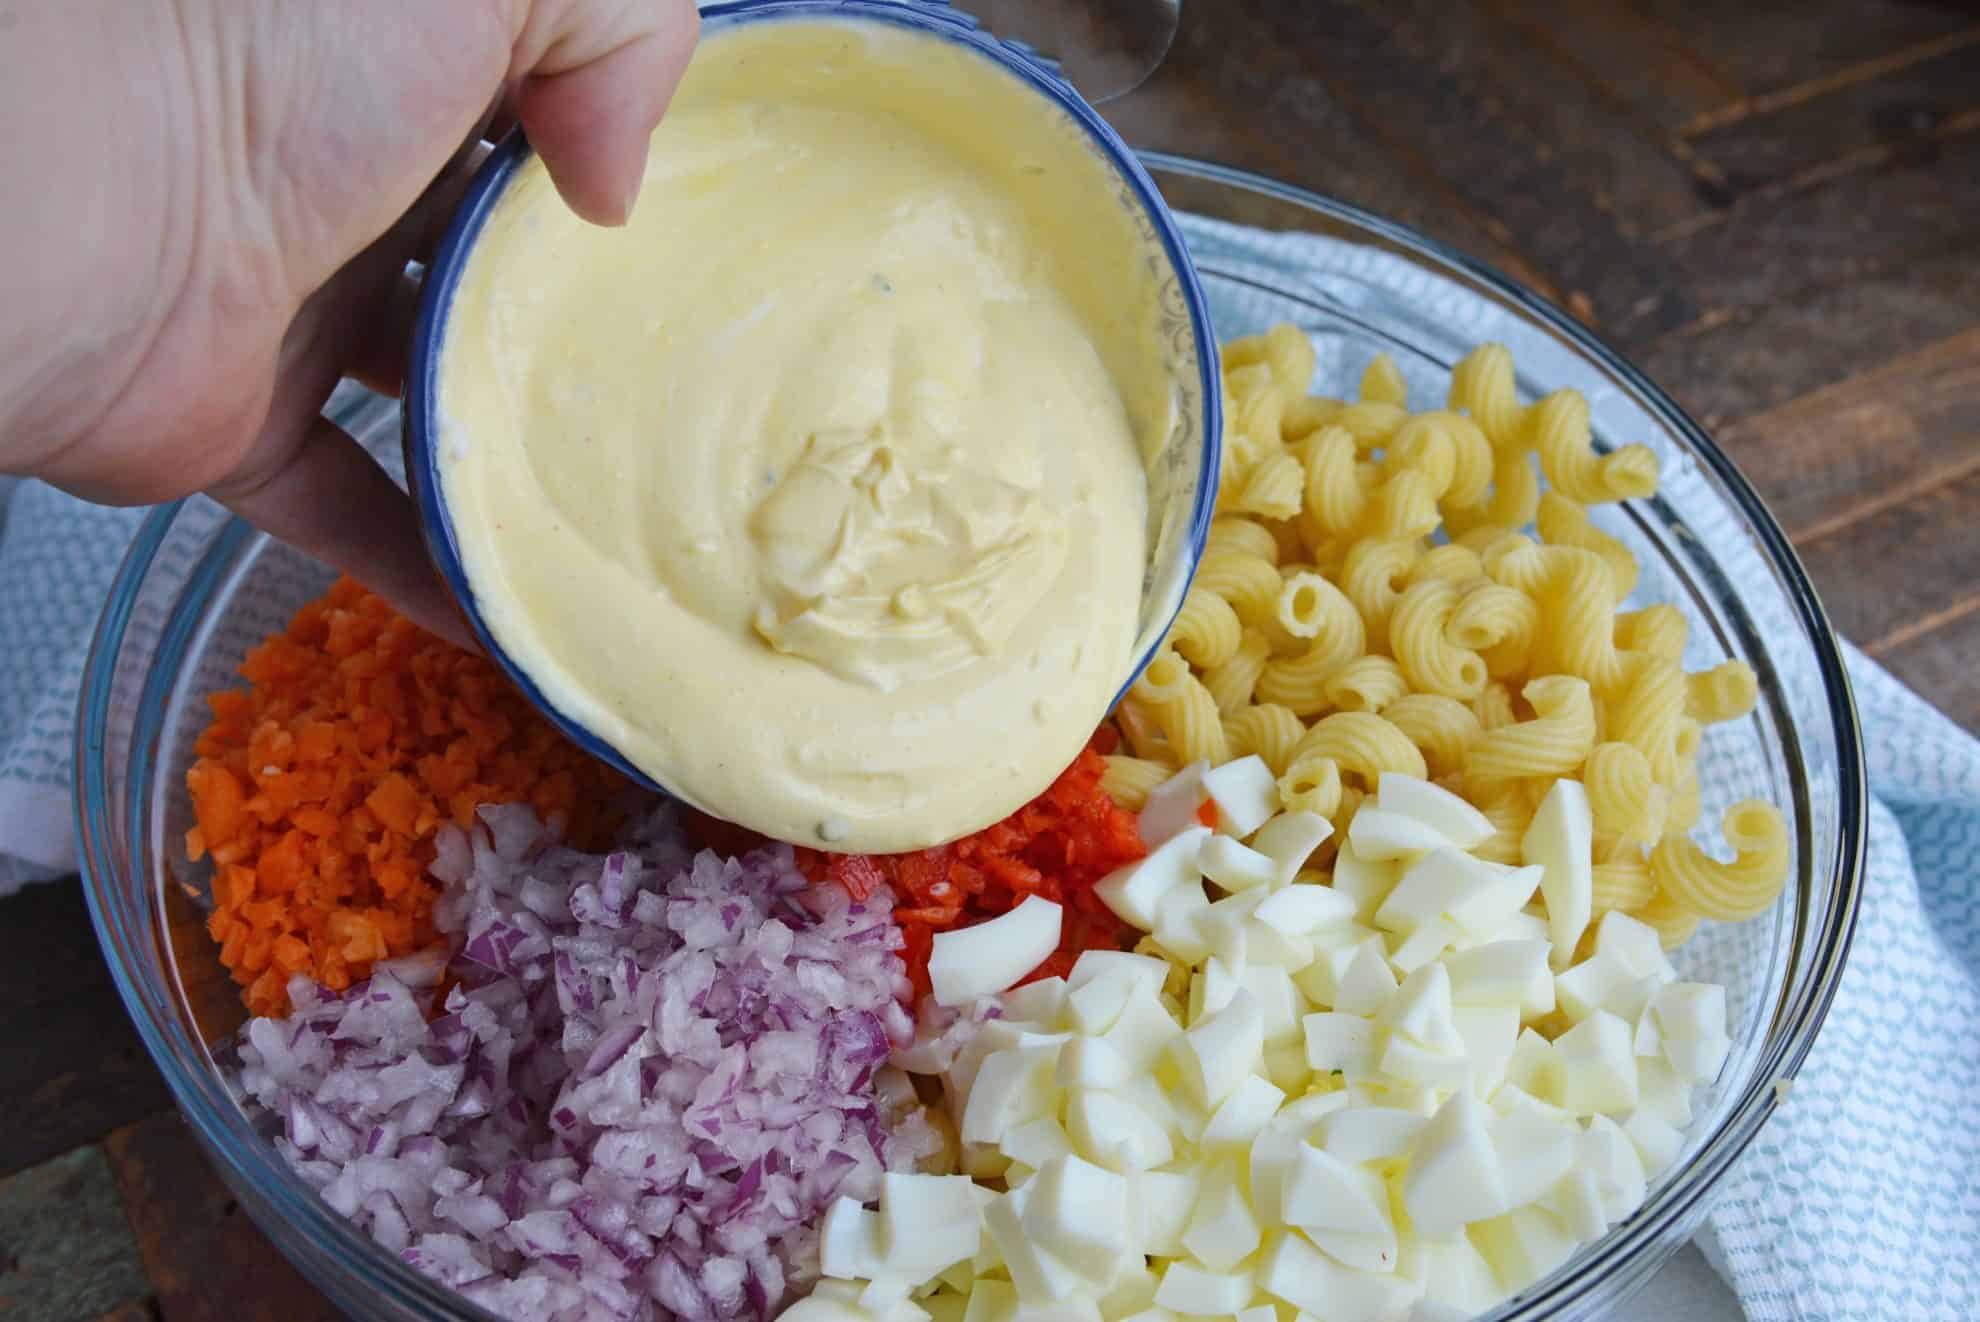 Pouring yolk mixture onto macaroni salad